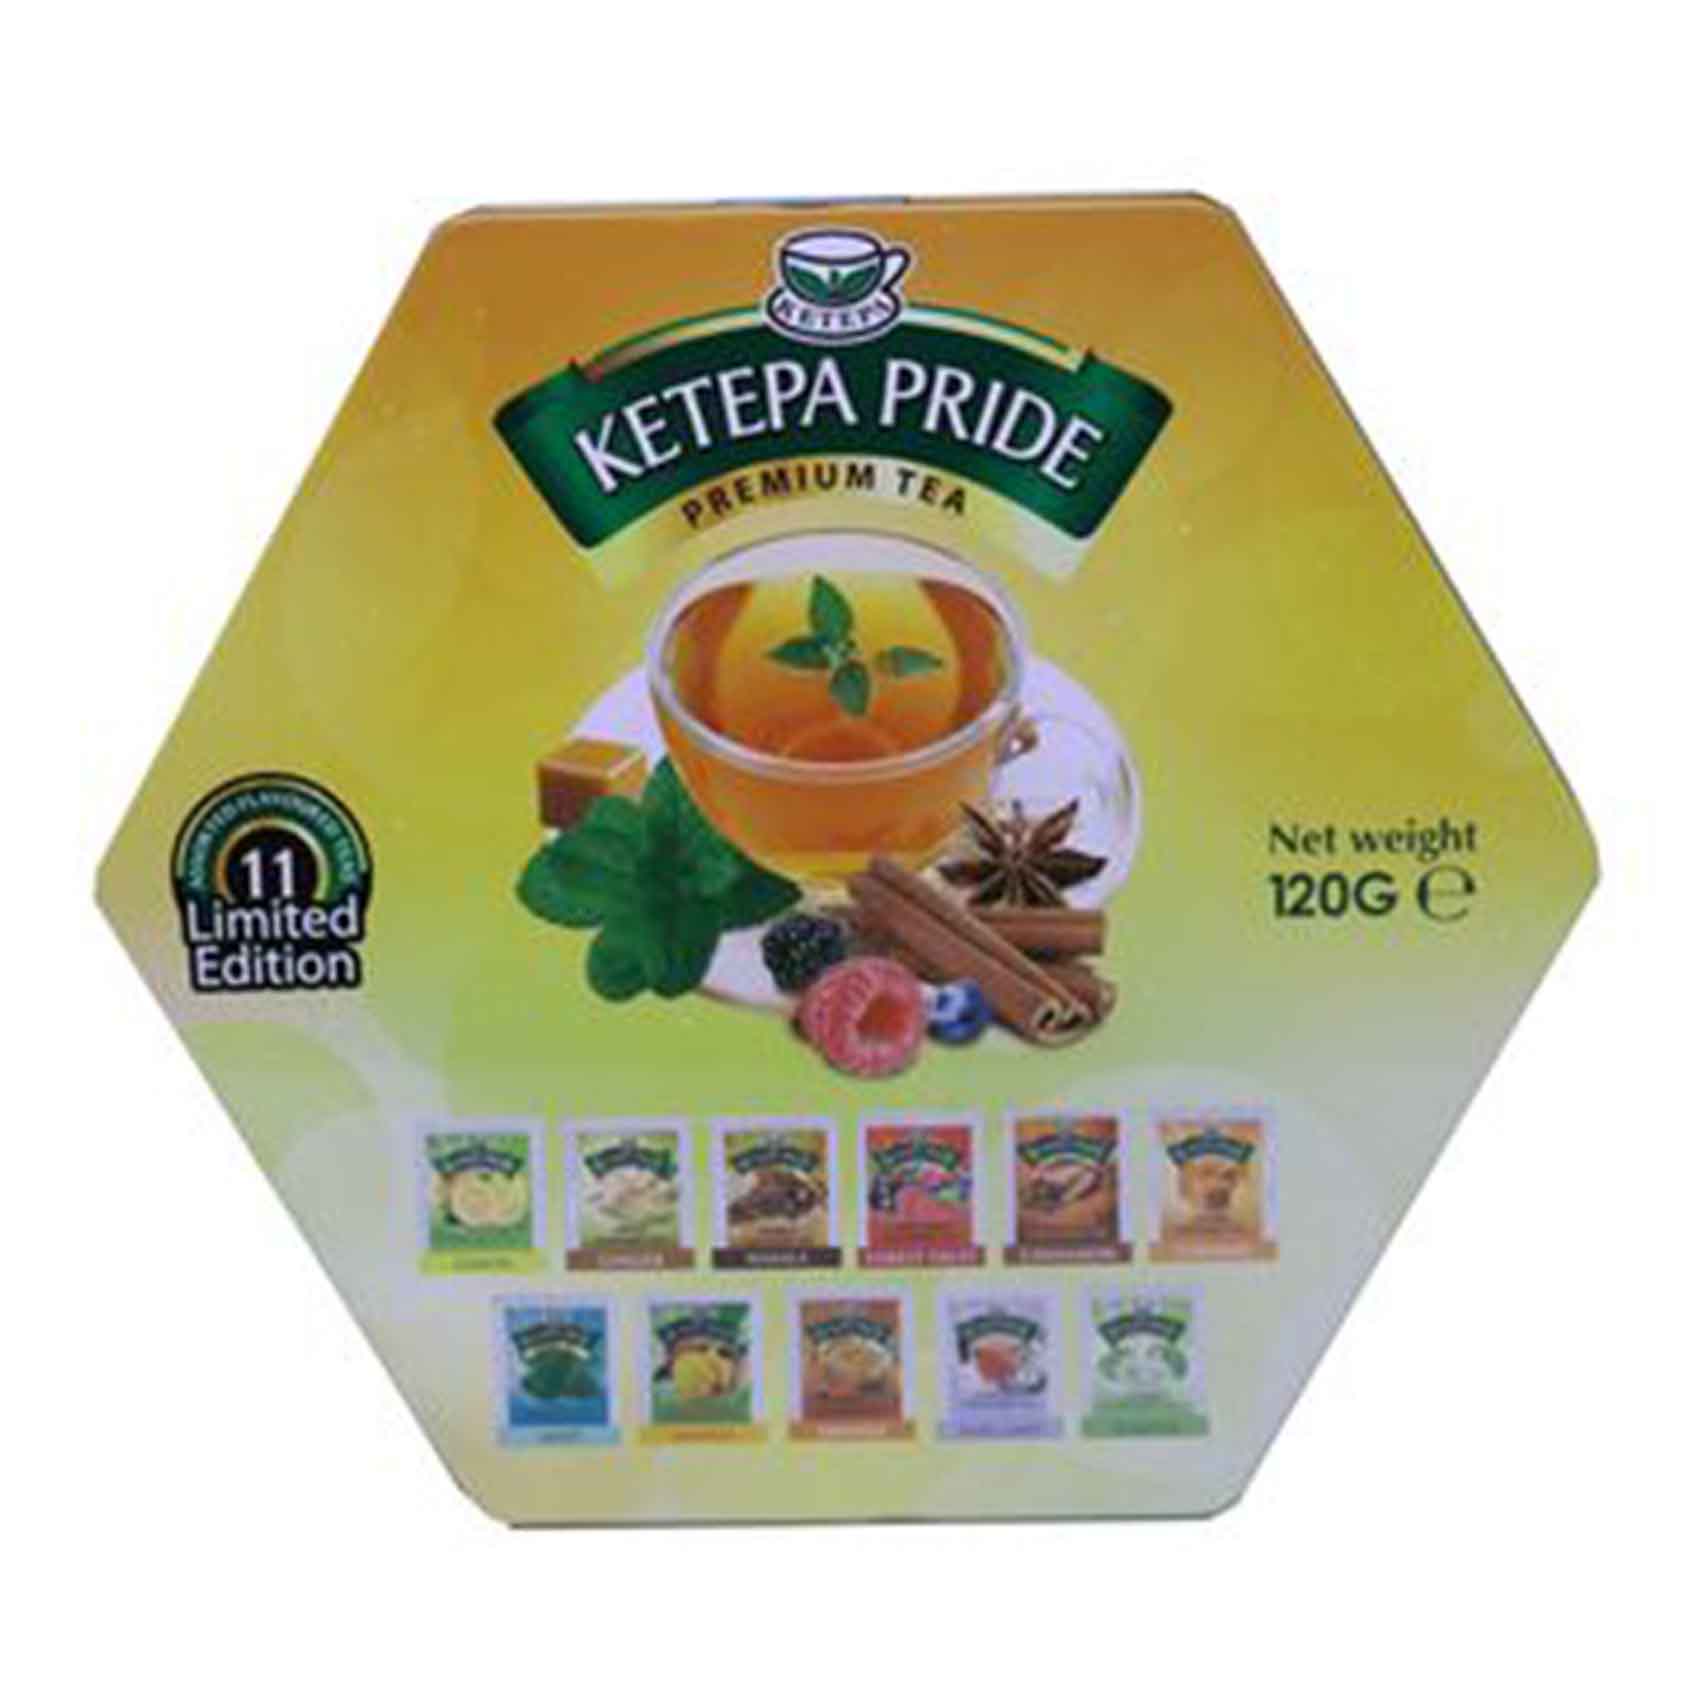 Ketepa Pride Assortment Flavored Tea Bags 120g